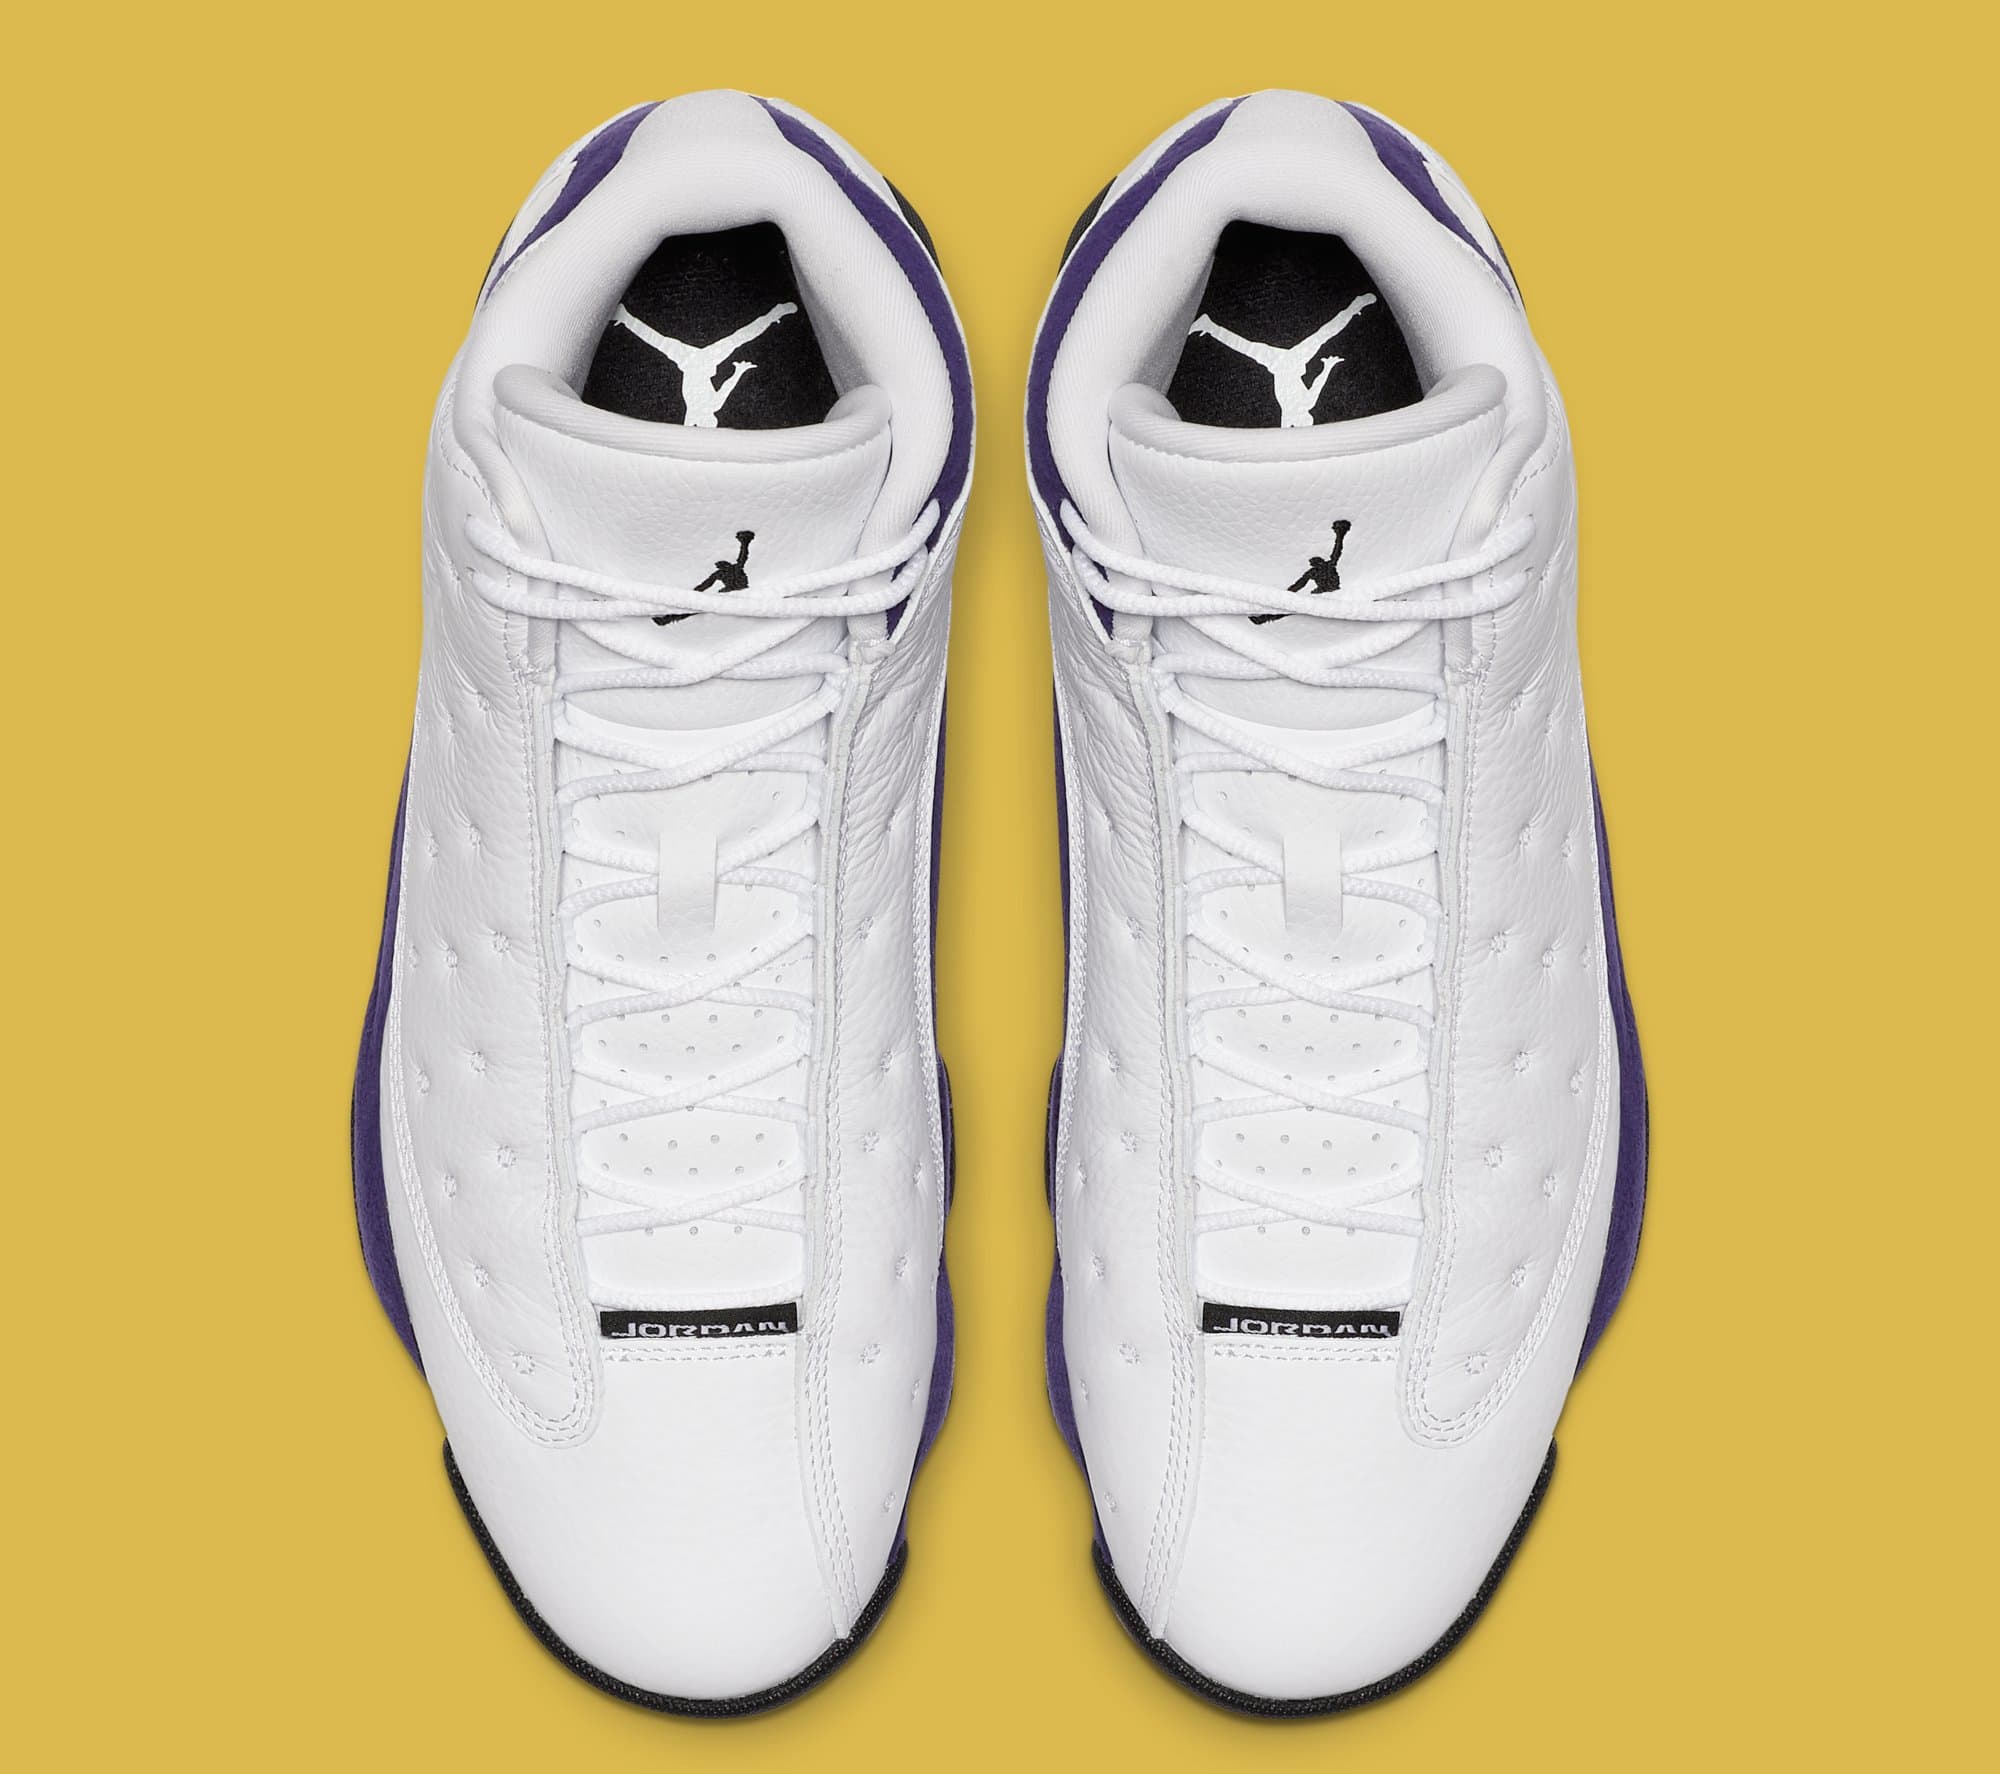 Air Jordan 13 'Lakers' White/Black/Court Purple/University Gold 414571-105 (Top)